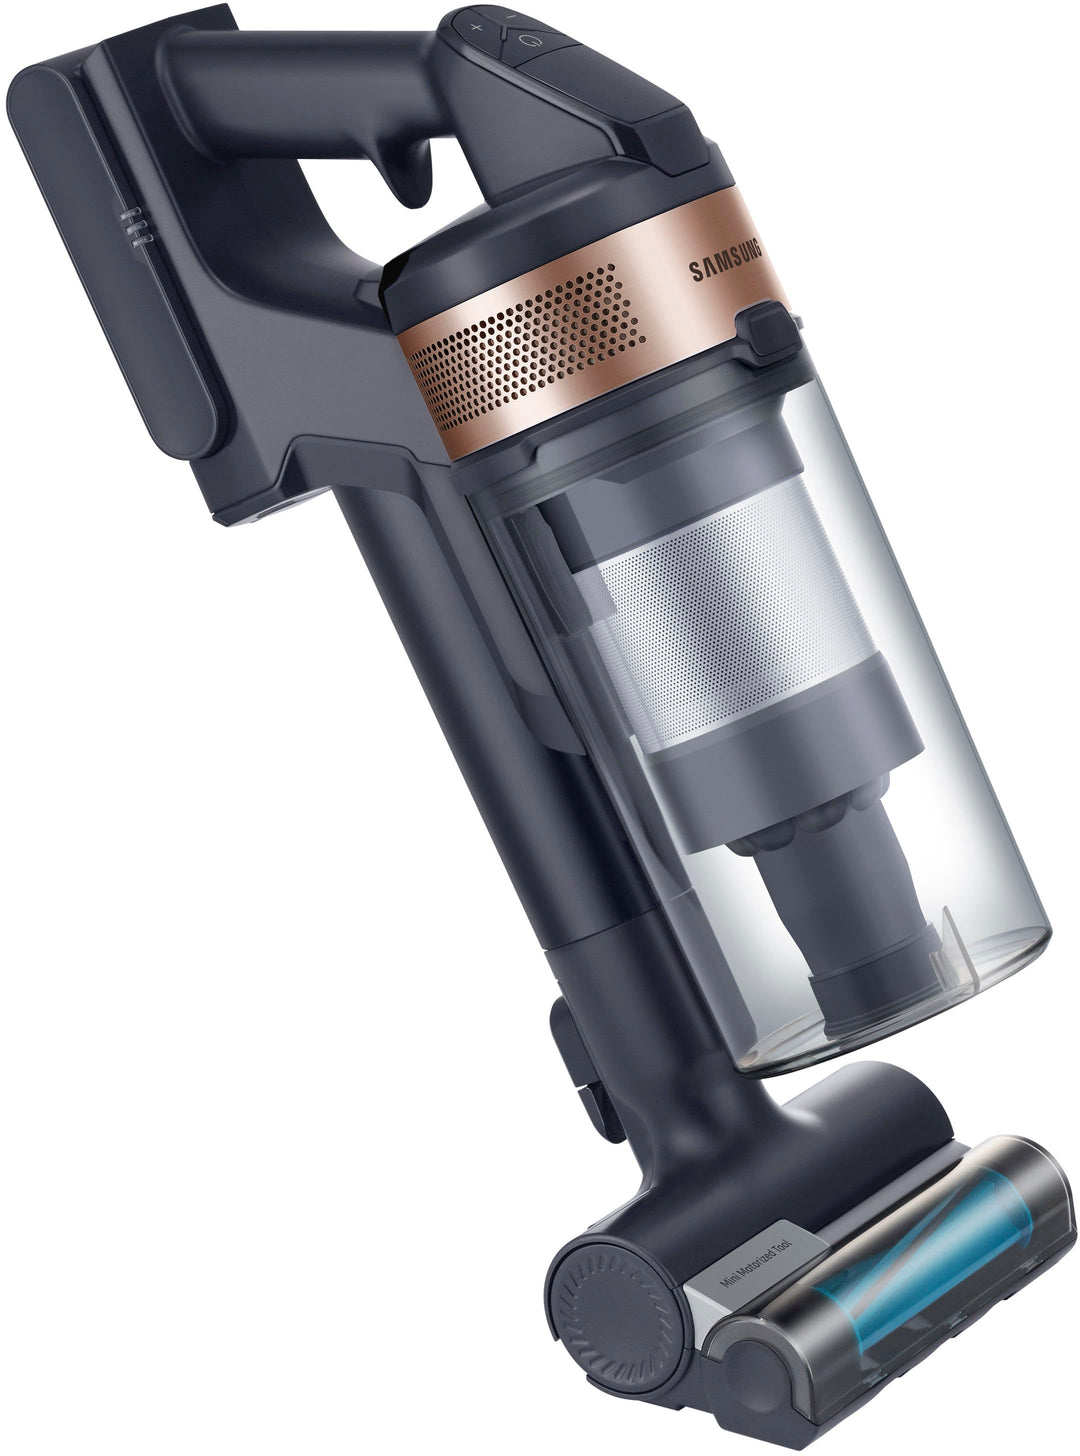 Samsung - Jet™ 60 Pet Cordless Stick Vacuum - Rose Gold_8